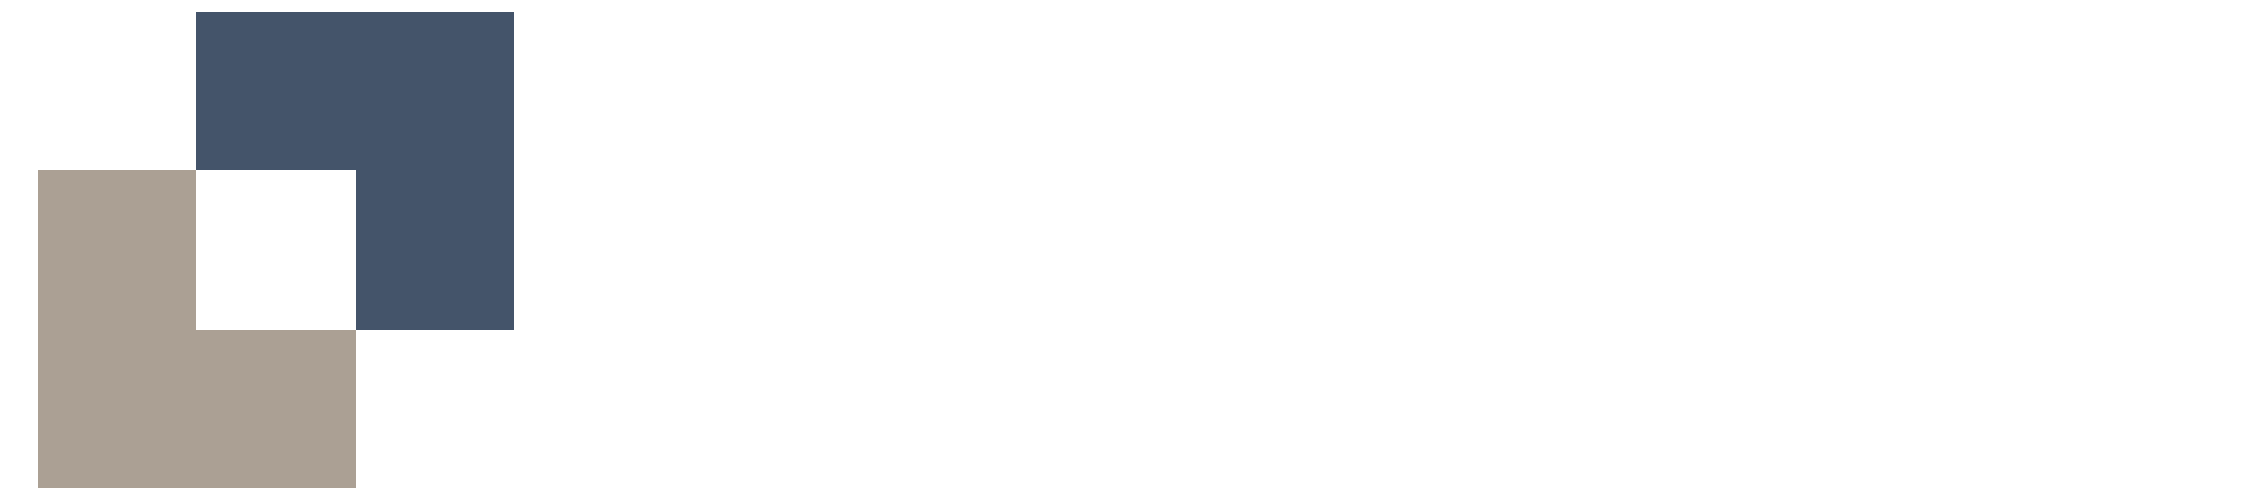 Platform Smart